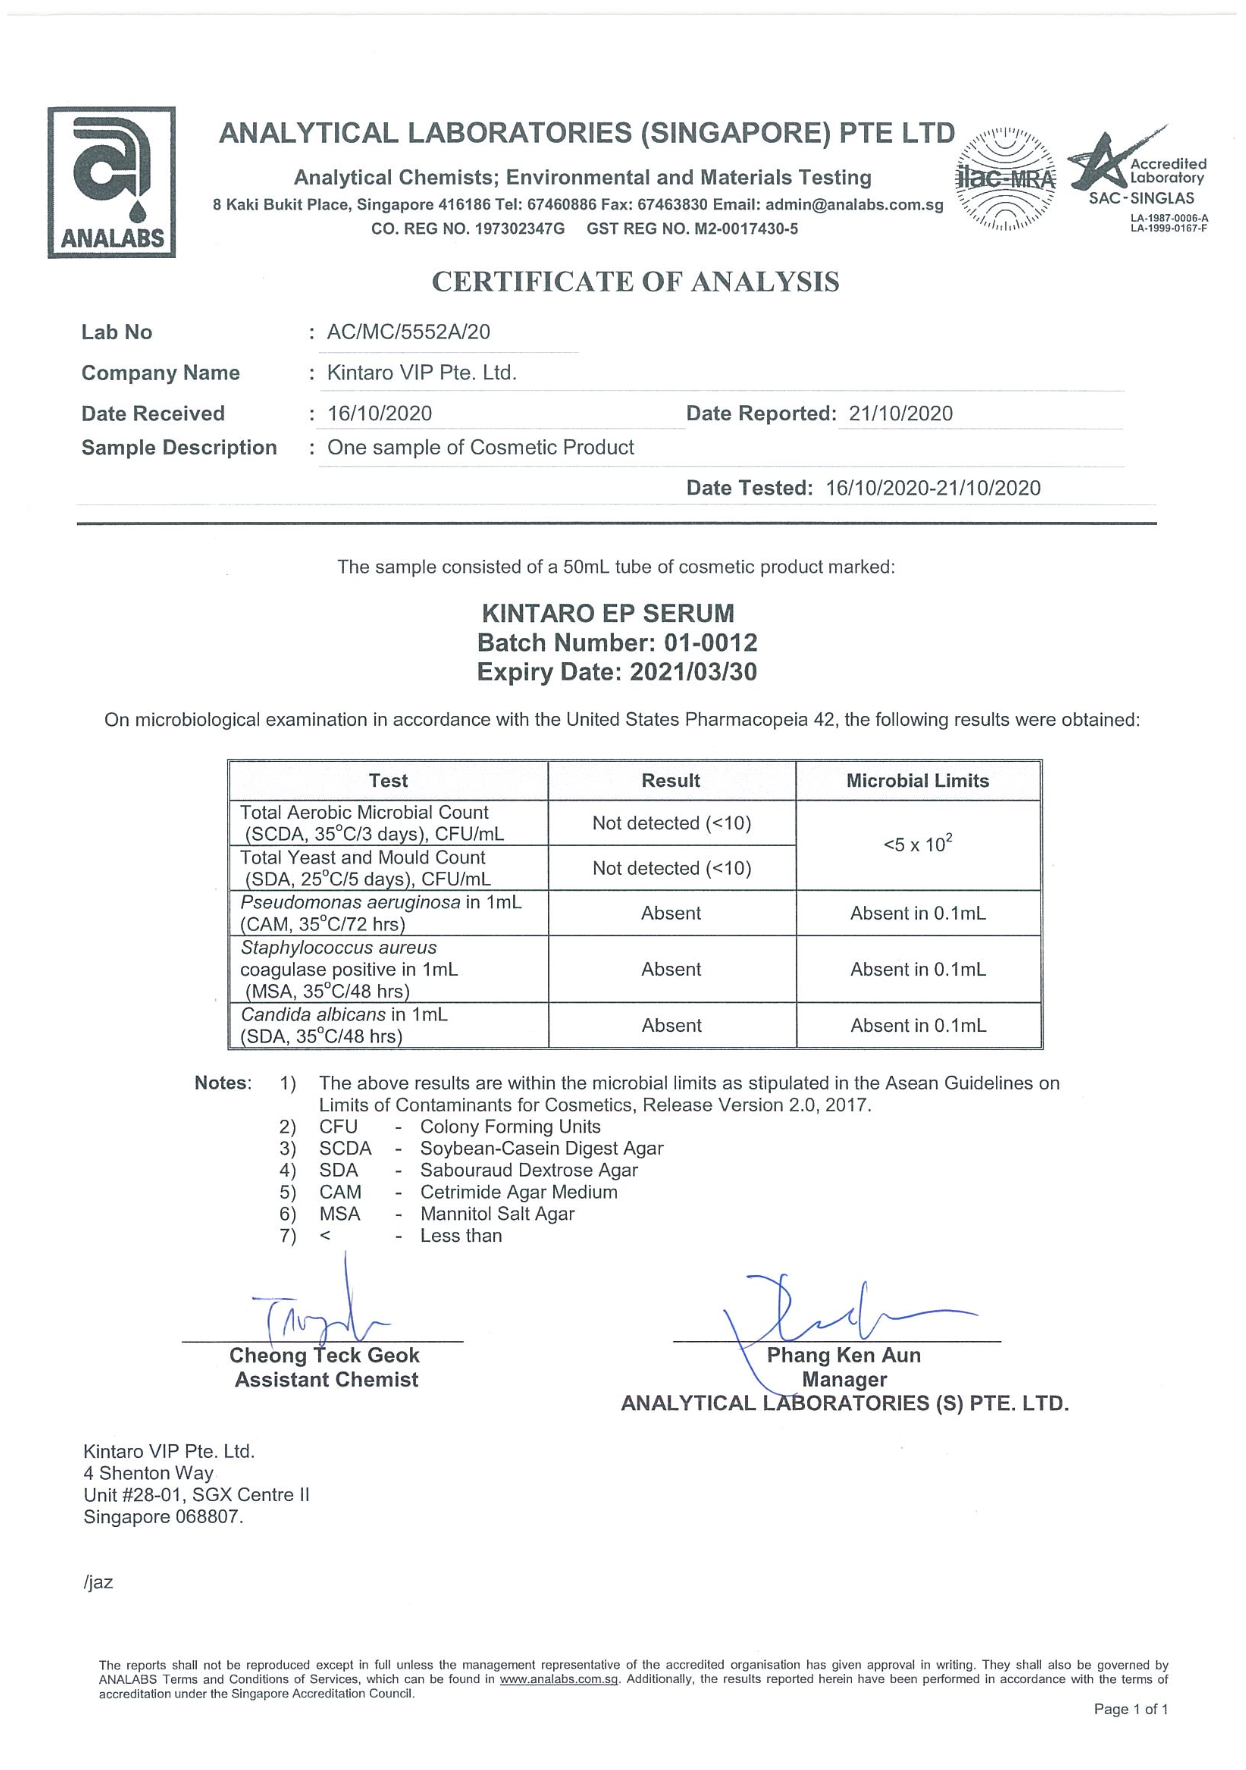 Indonesian patent certificate